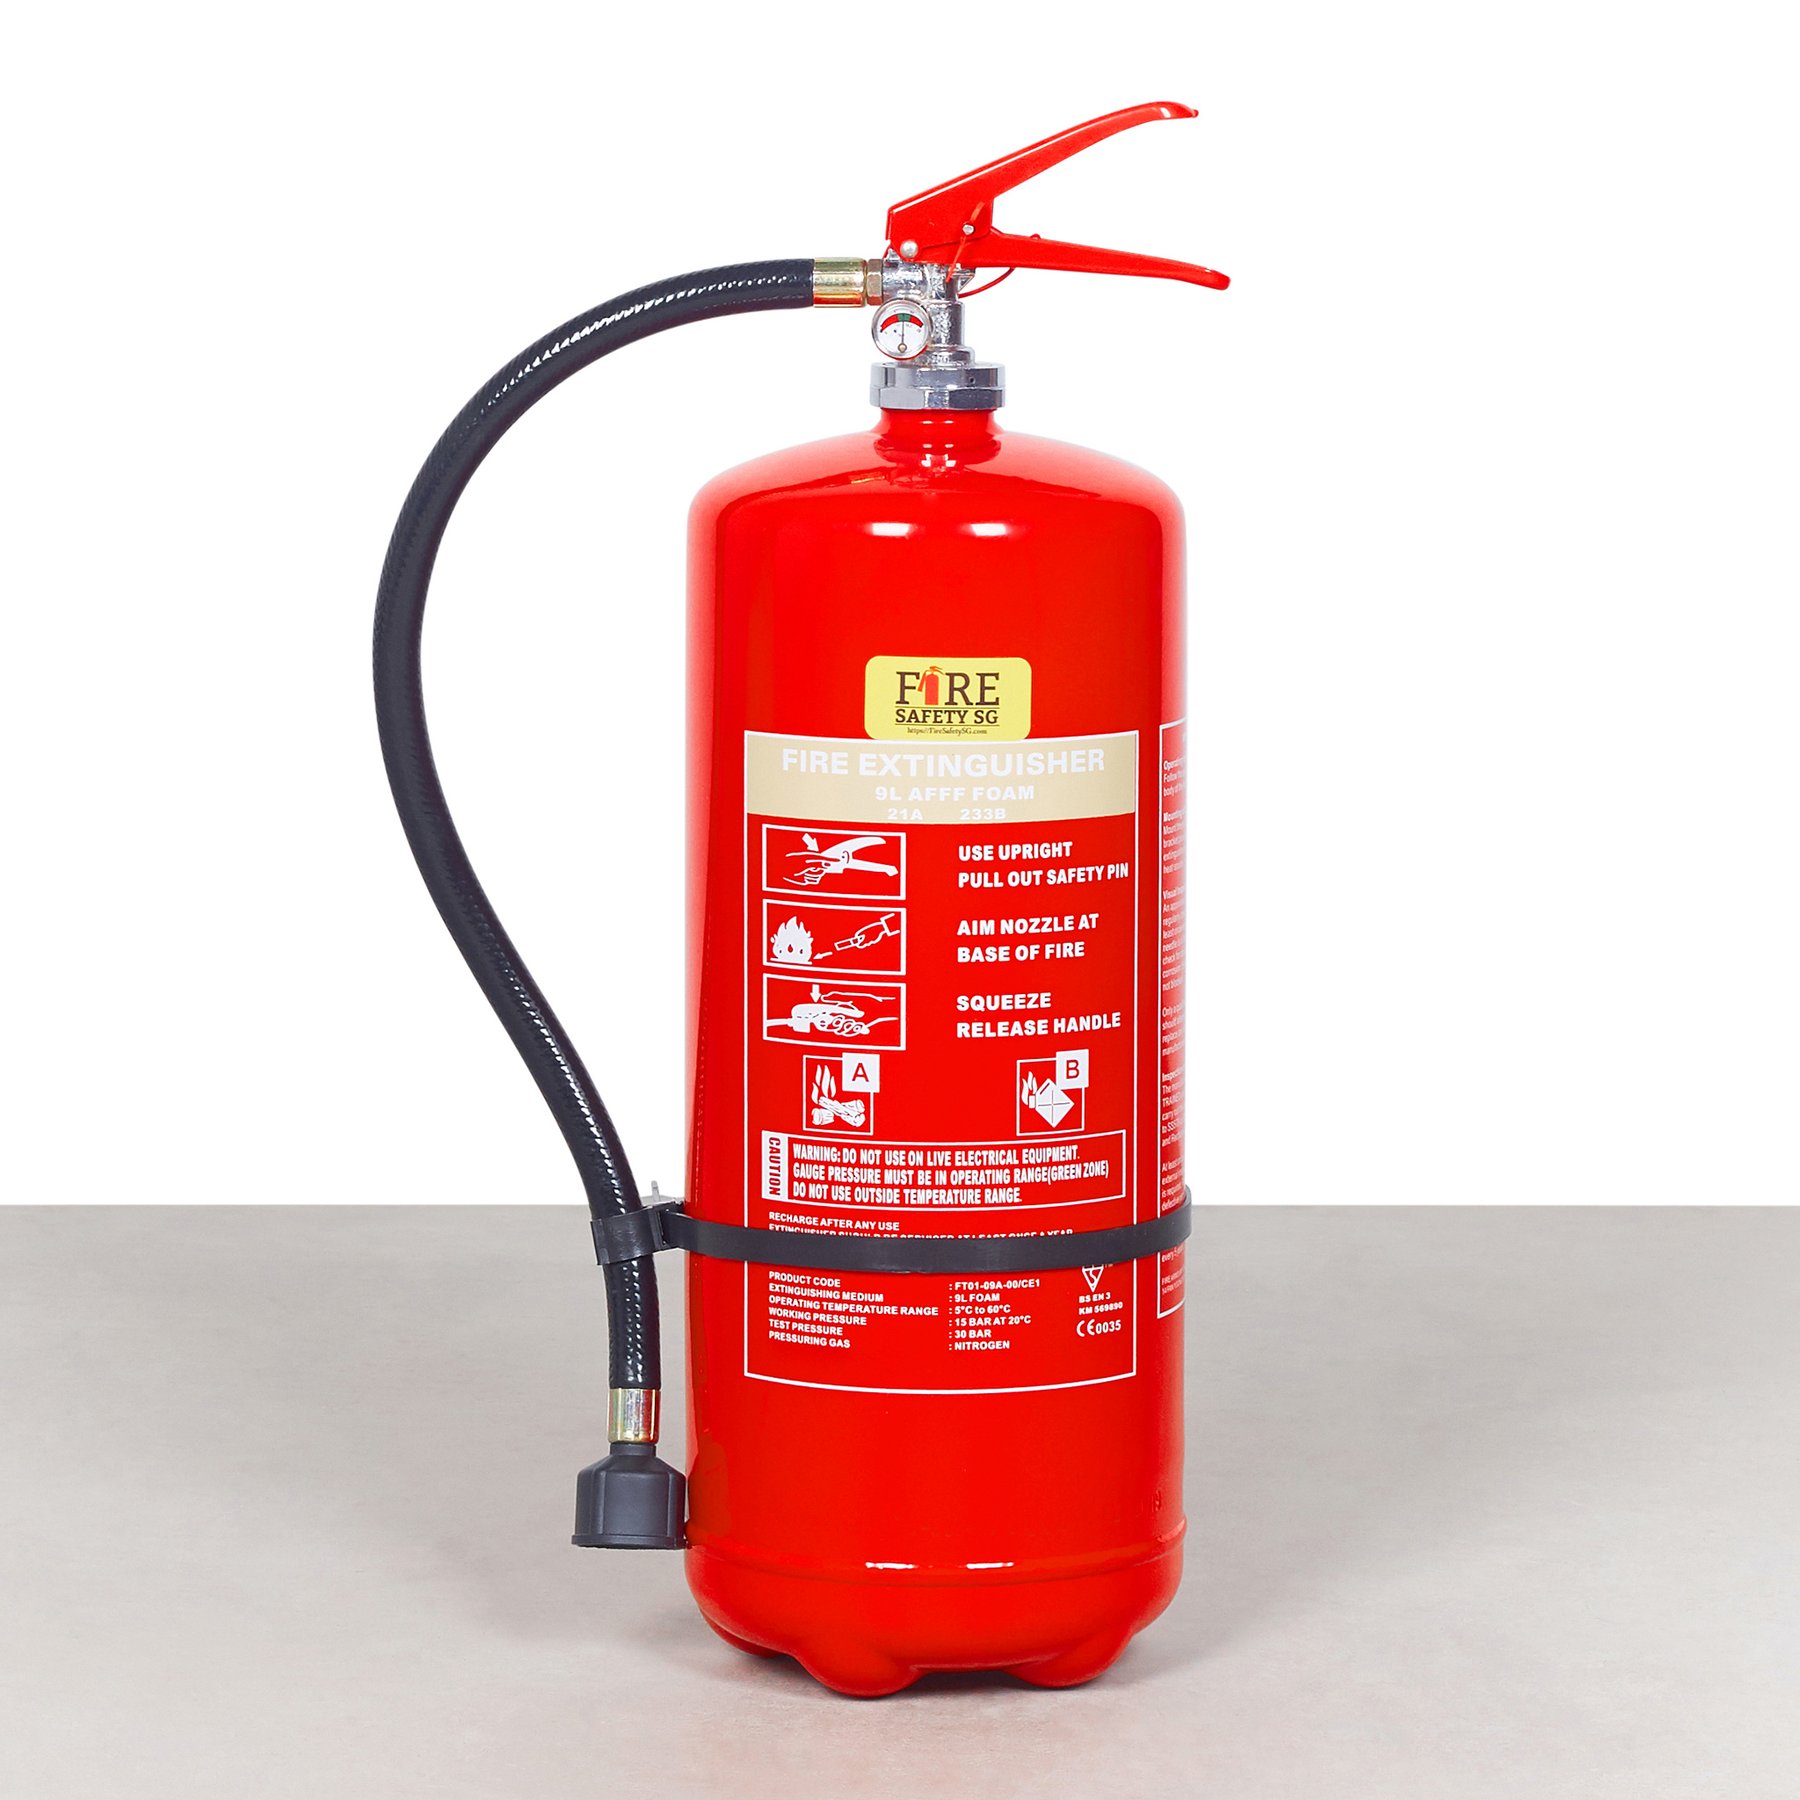 Afff Foam Fire Extinguisher Supplier In Philippines Fire Safety Ph